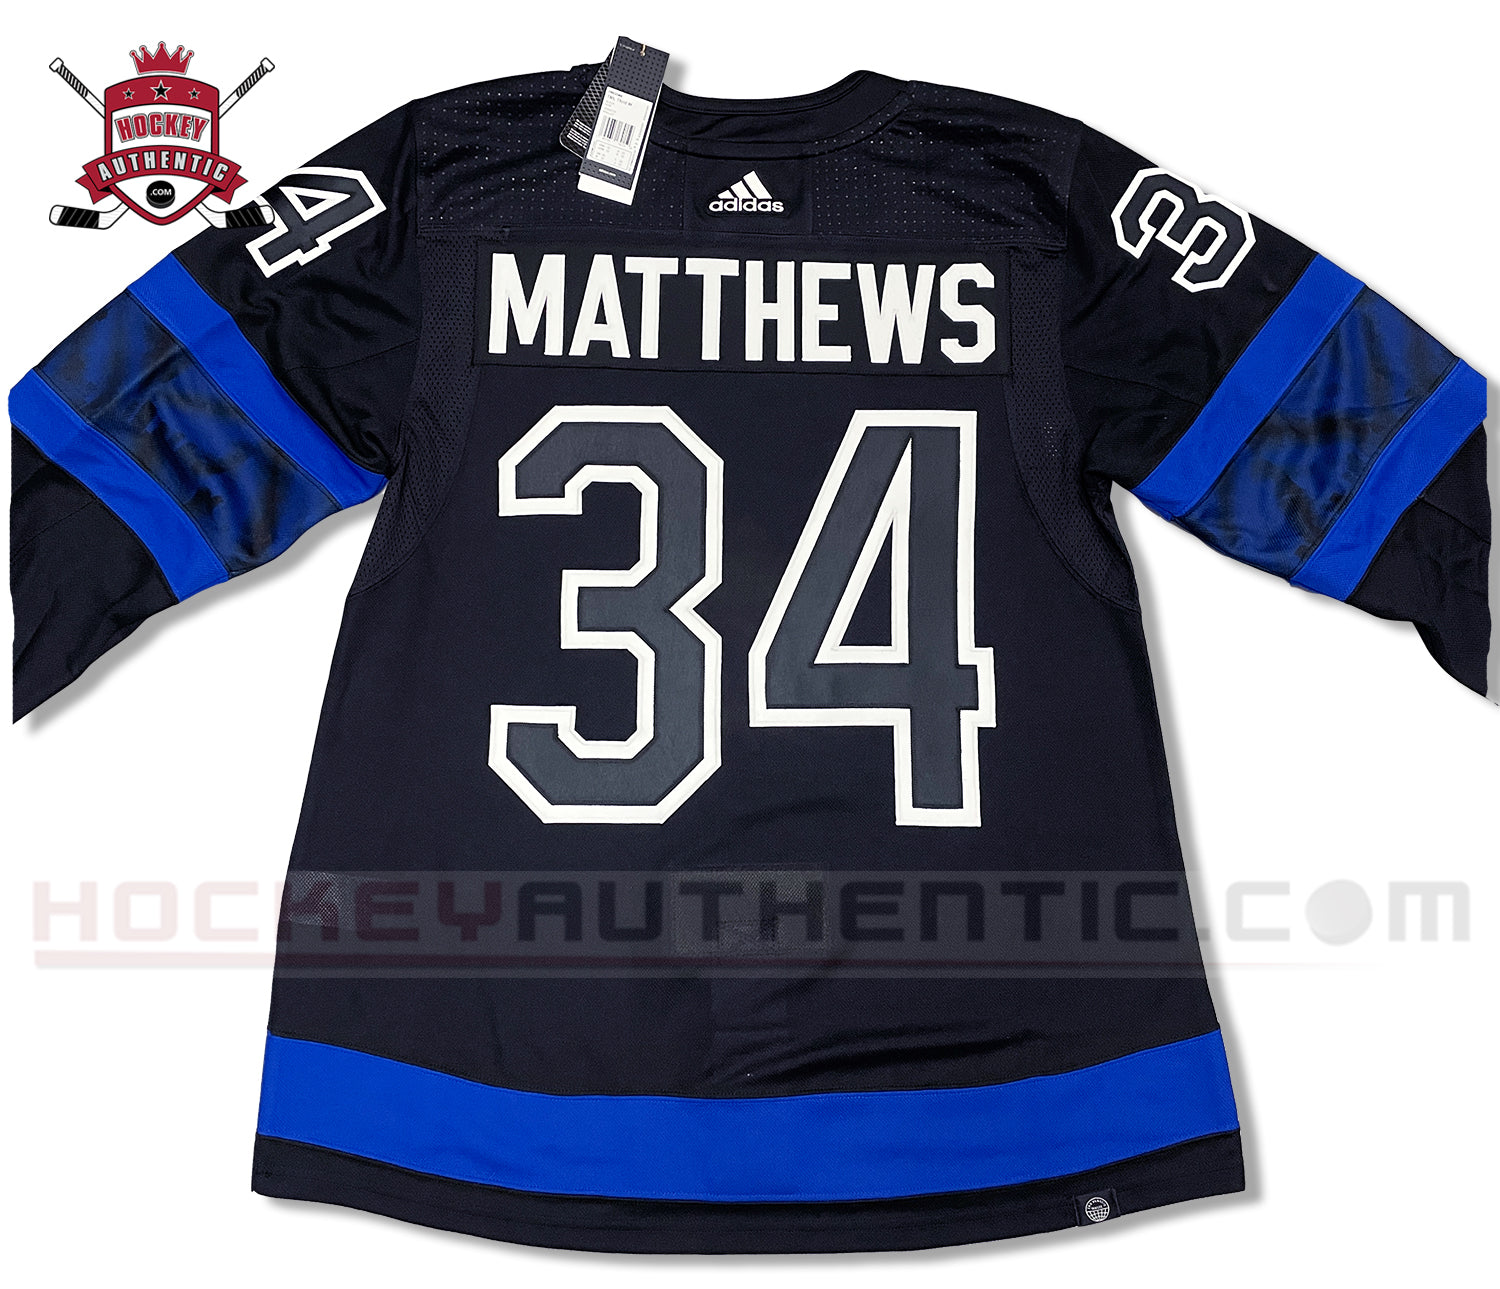 Toronto Maple Leafs Auston Matthews adidas home jersey size 46